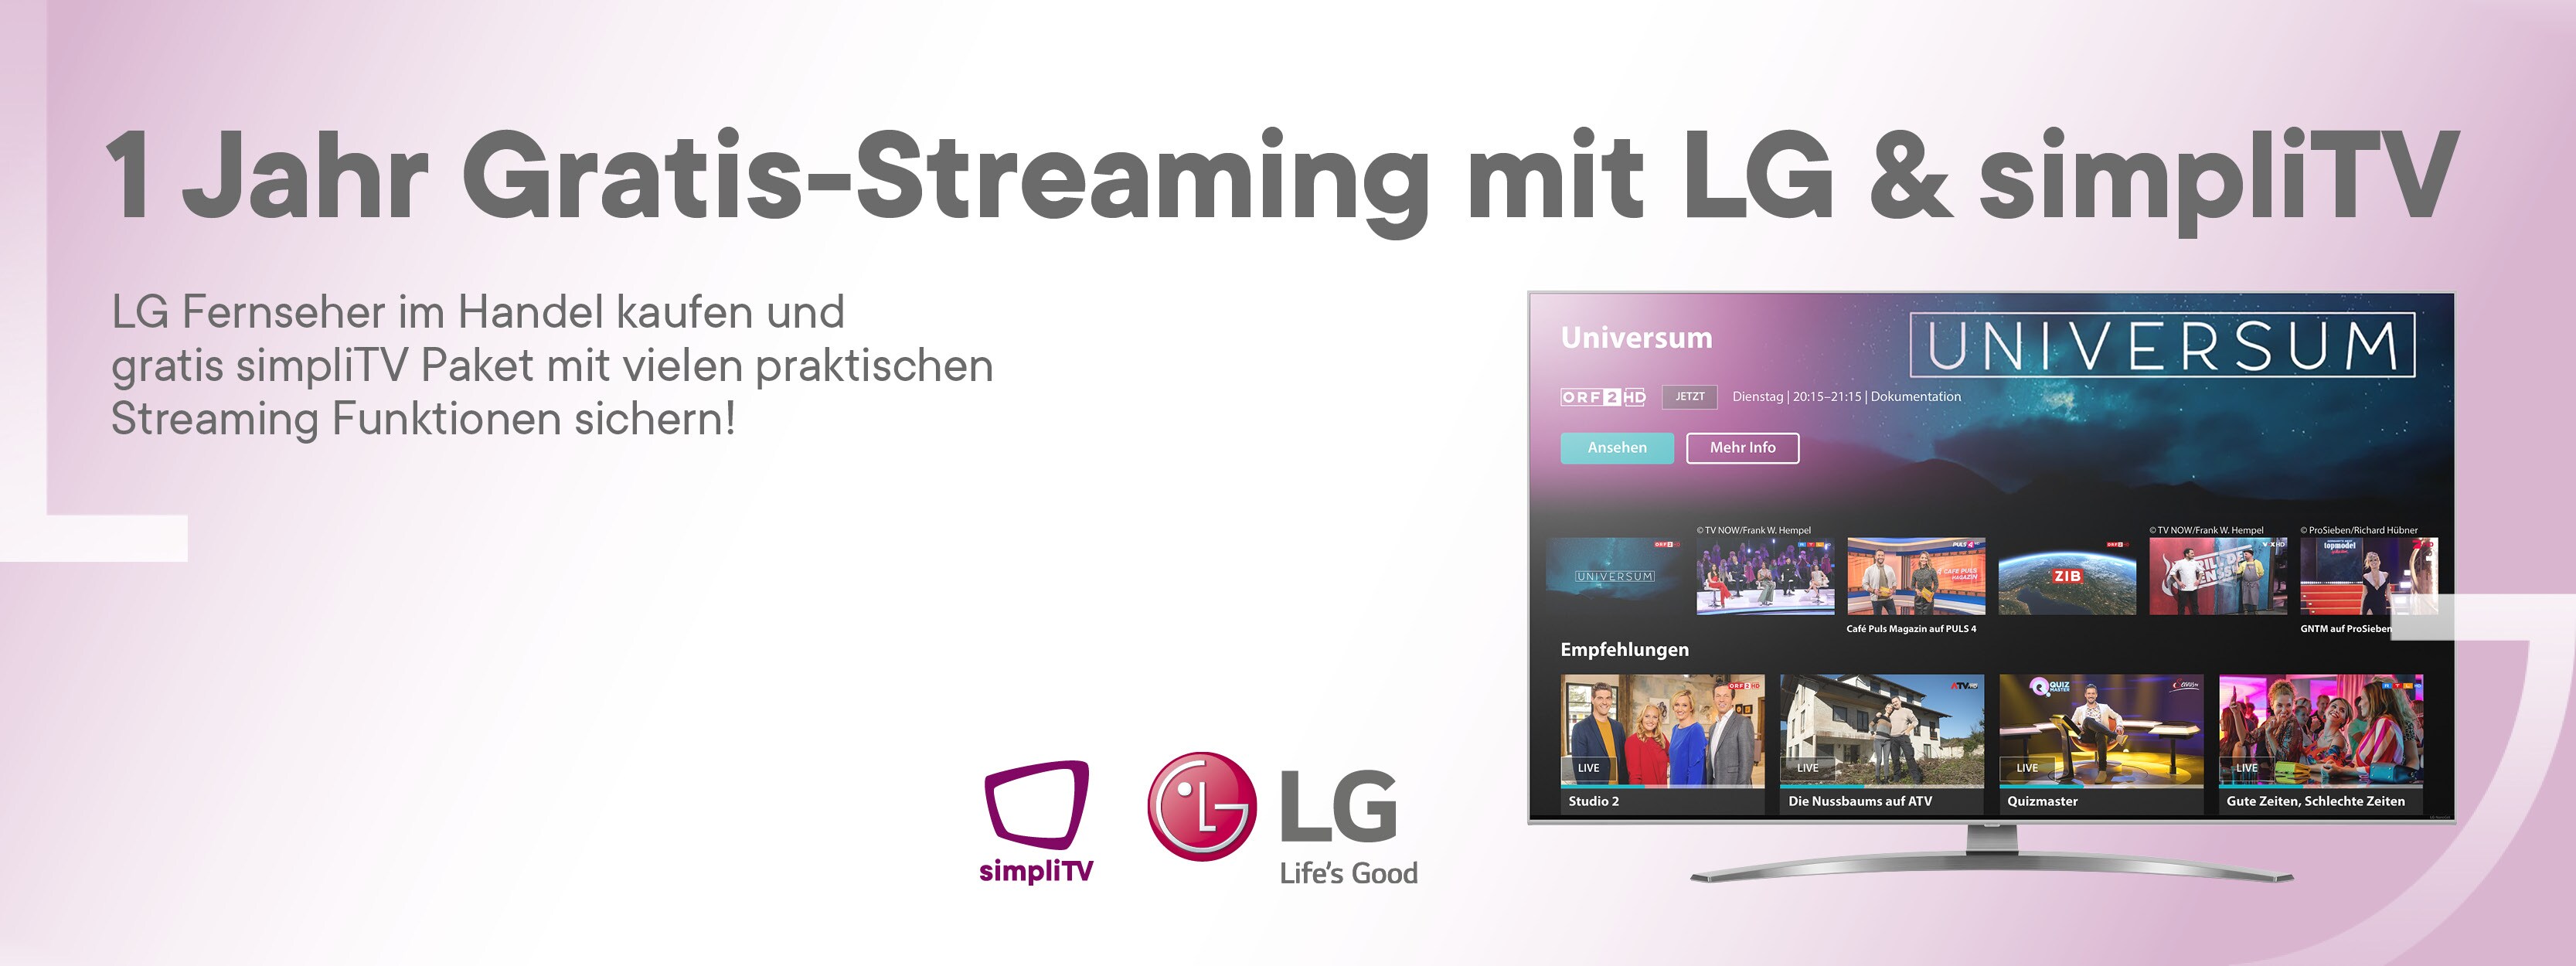 1 Jahr Gratis-Streaming  mit LG & simpliTV